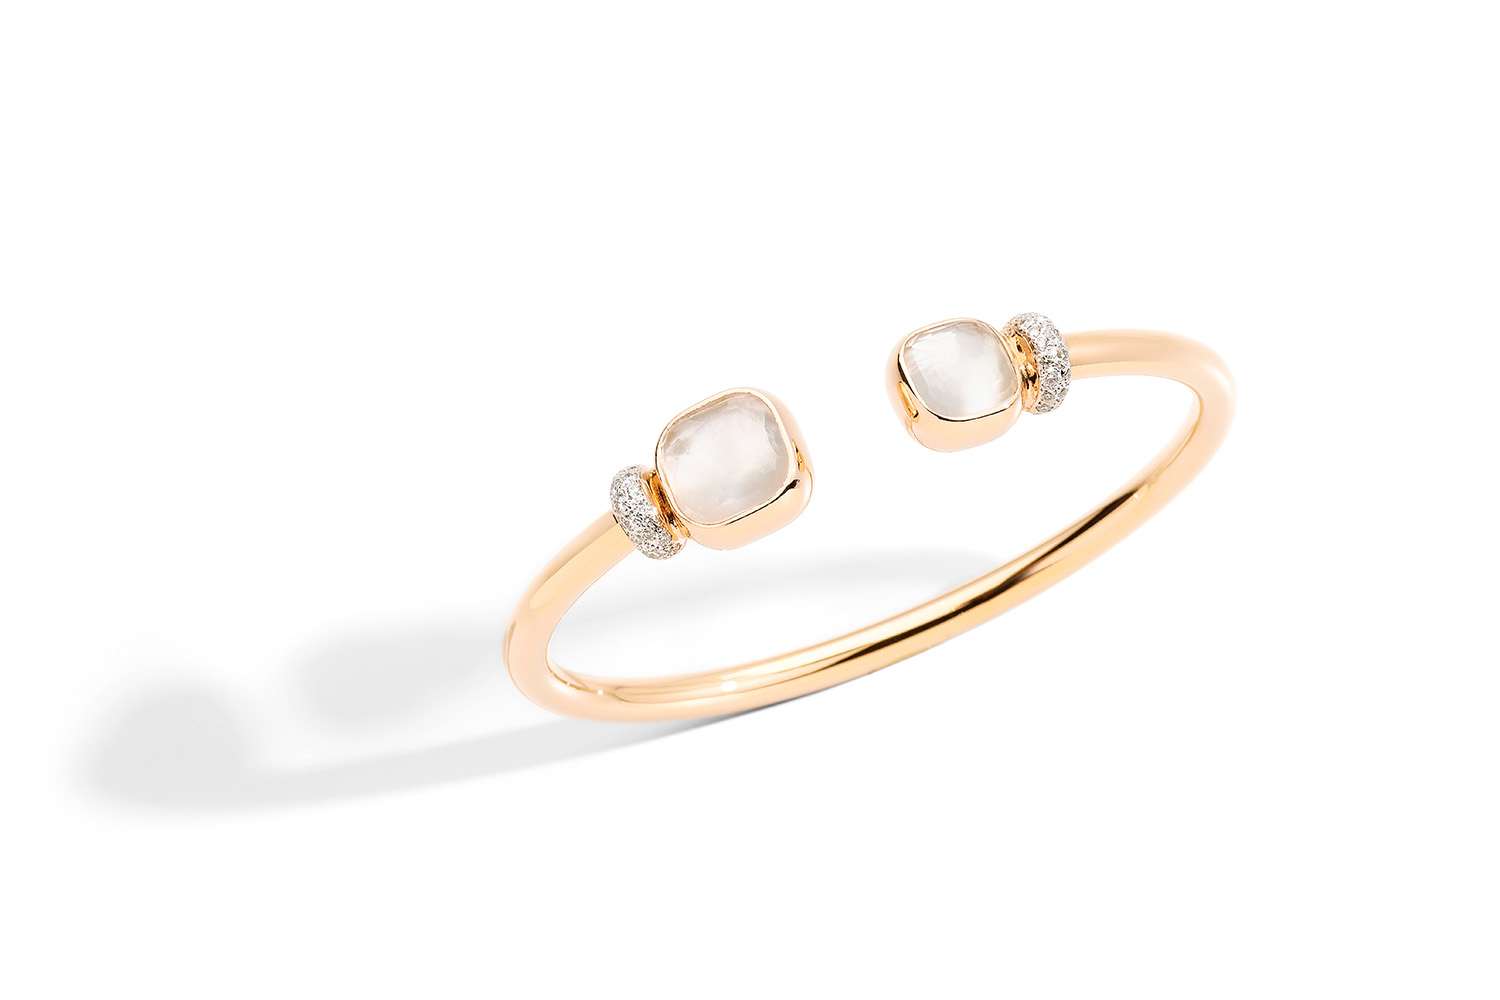 NUDO-bracelet-in-rose-gold-with-white-topaz-and-white-diamonds-by-Pomellato-–-kopia